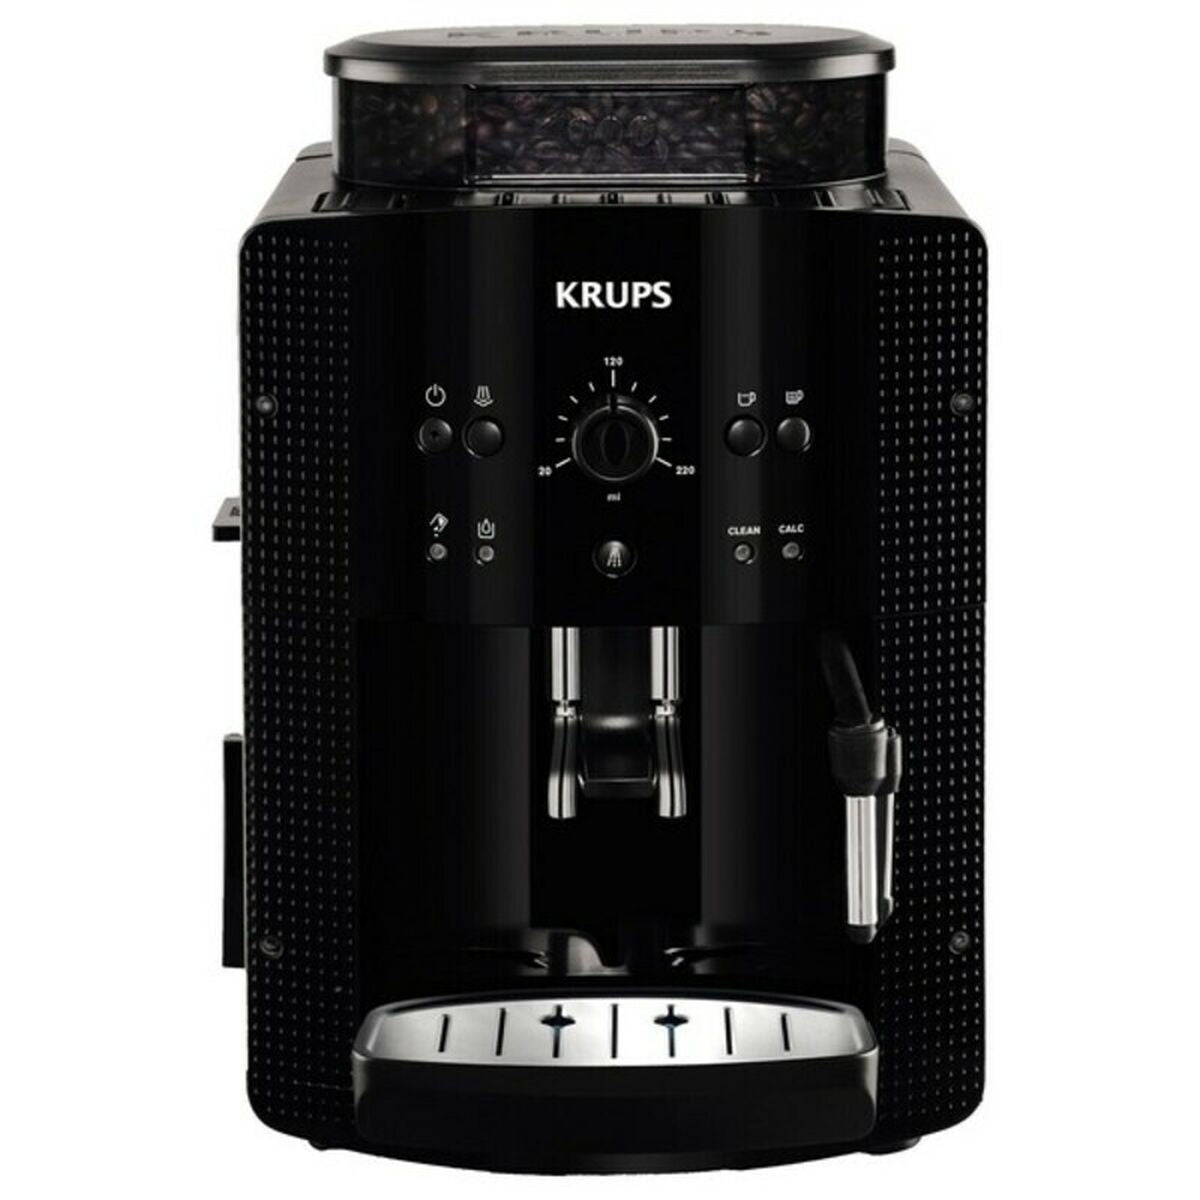 Superautomatische Kaffeemaschine Krups EA8108 Schwarz 1450 W 15 bar 1,8 L - CA International  